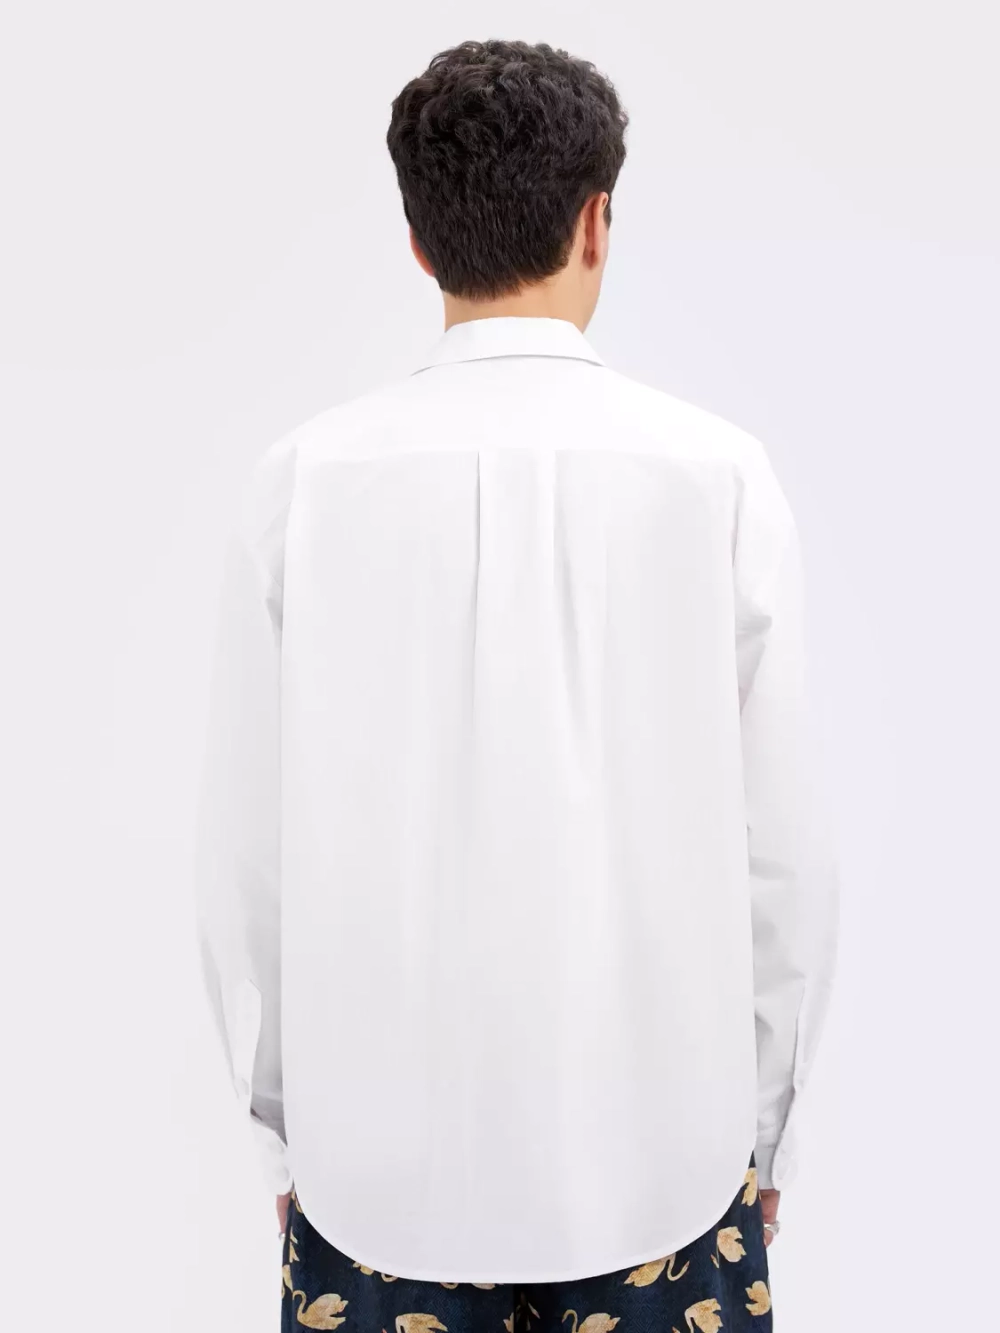 Рубашка белая базовая унисекс OLA OLA